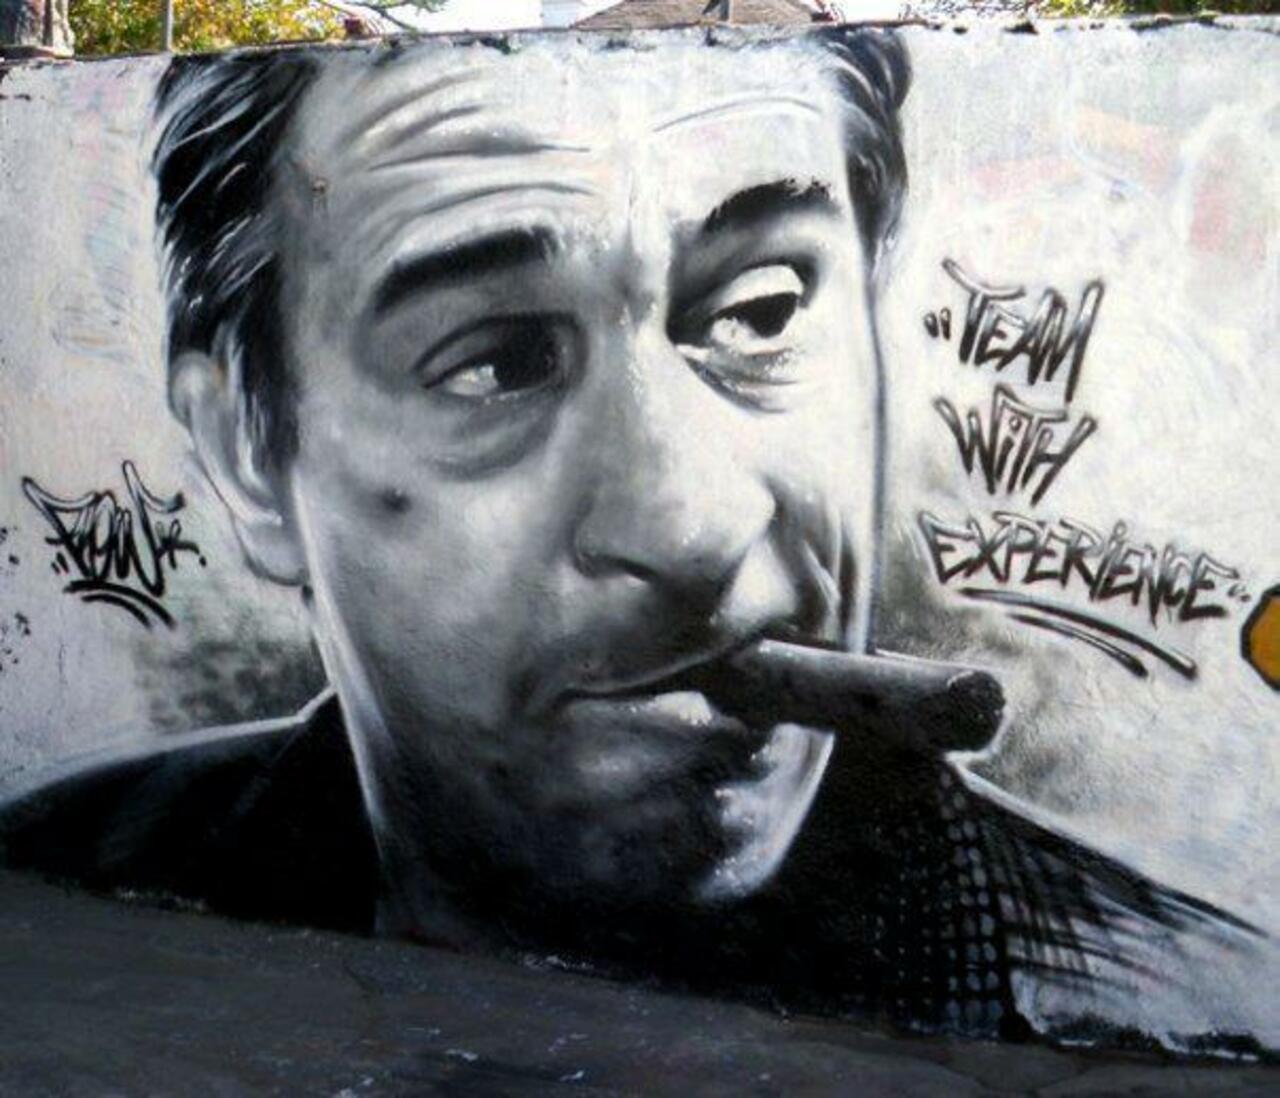 RT @StreetArtCinema: Robert de NIRO by artist #Flow in ?
#streetartcinema #streetart #graffiti
#DeNiro #American #Actor #Cinema #Film http://t.co/zWXXh08bg8